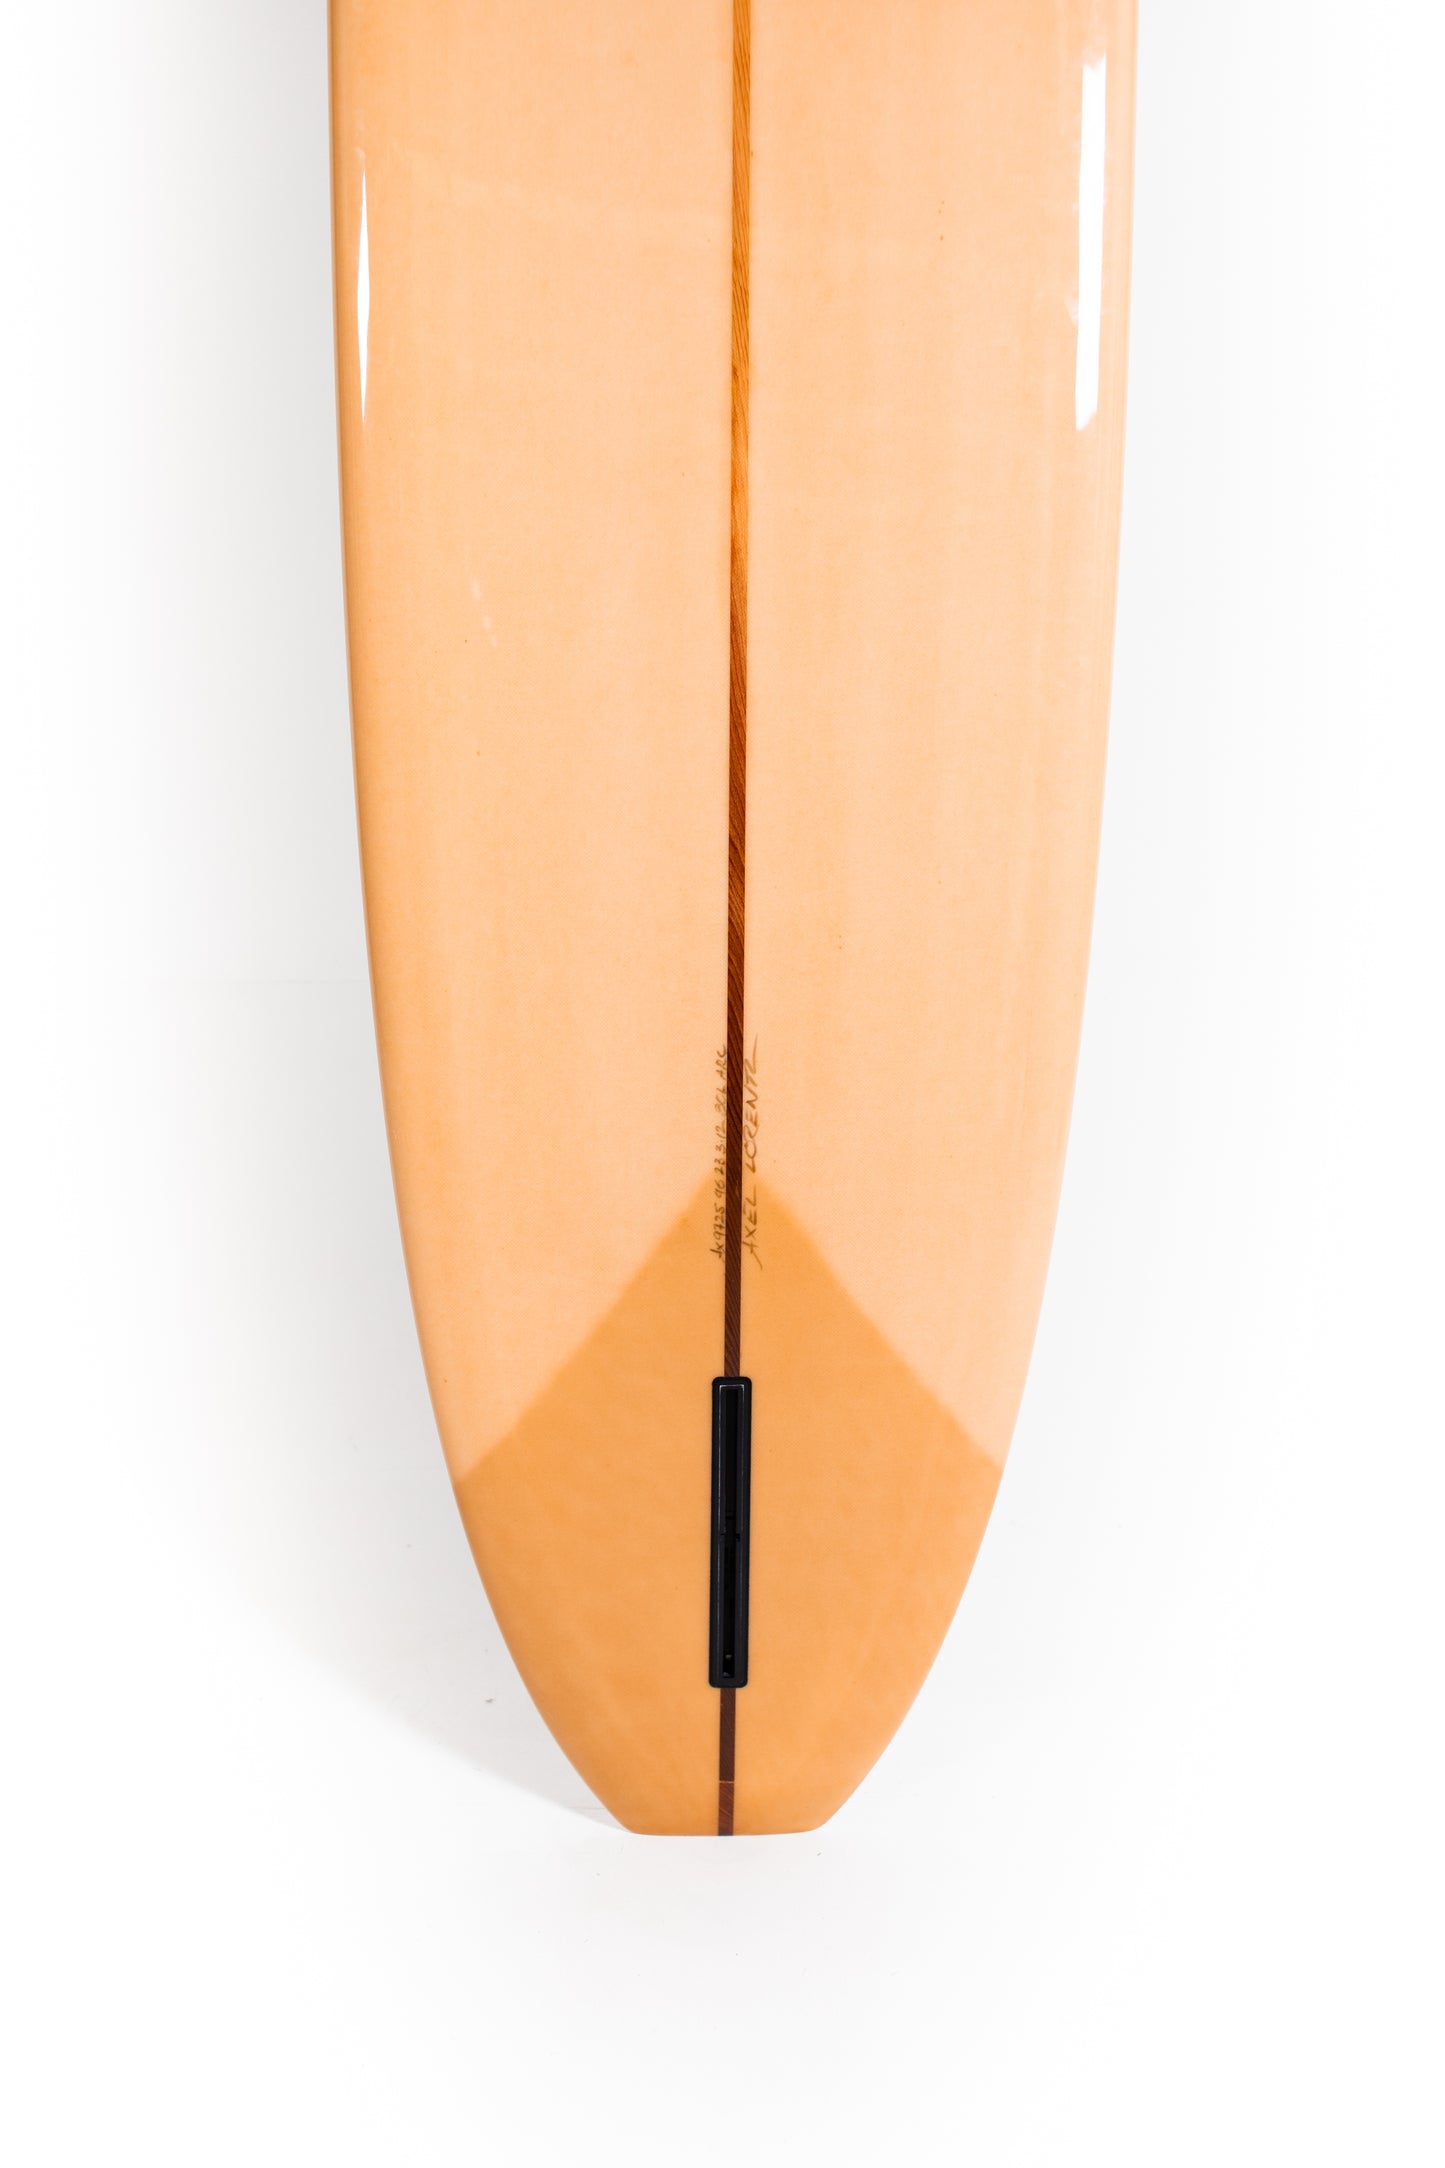 
                  
                    Pukas Surf Shop - Pukas Surfboards - MAYFLOWER by Axel Lorentz -  9'6" x 23 x 3,12 x 80L - AX09725
                  
                